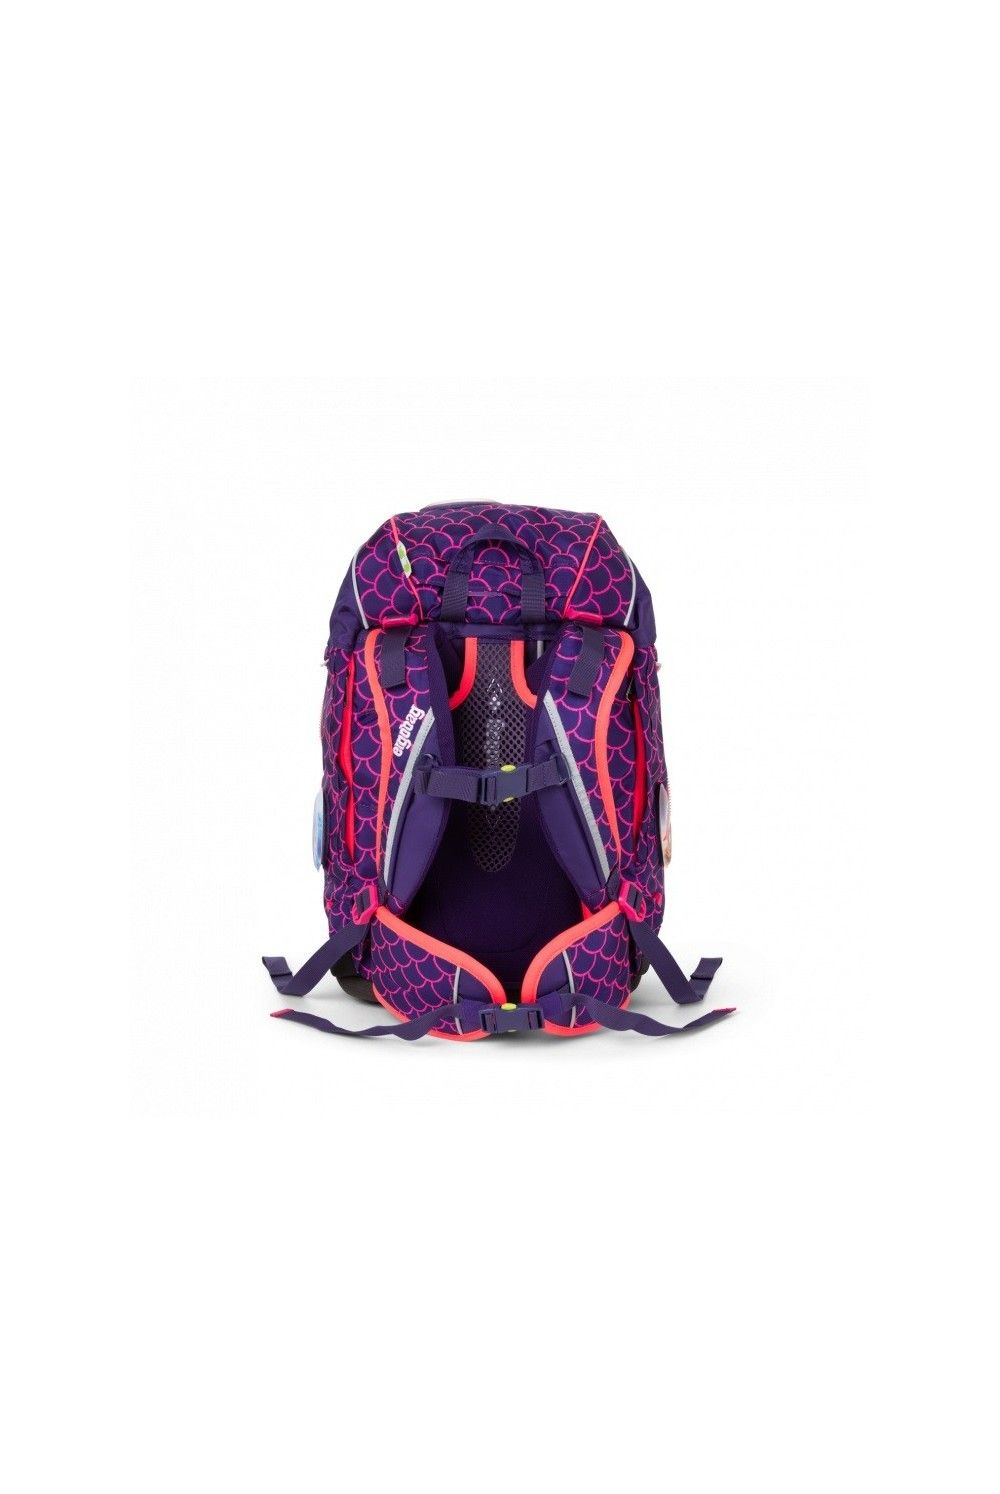 ergobag pack school backpack set 6 pieces Special Edition PerlentauchBaer